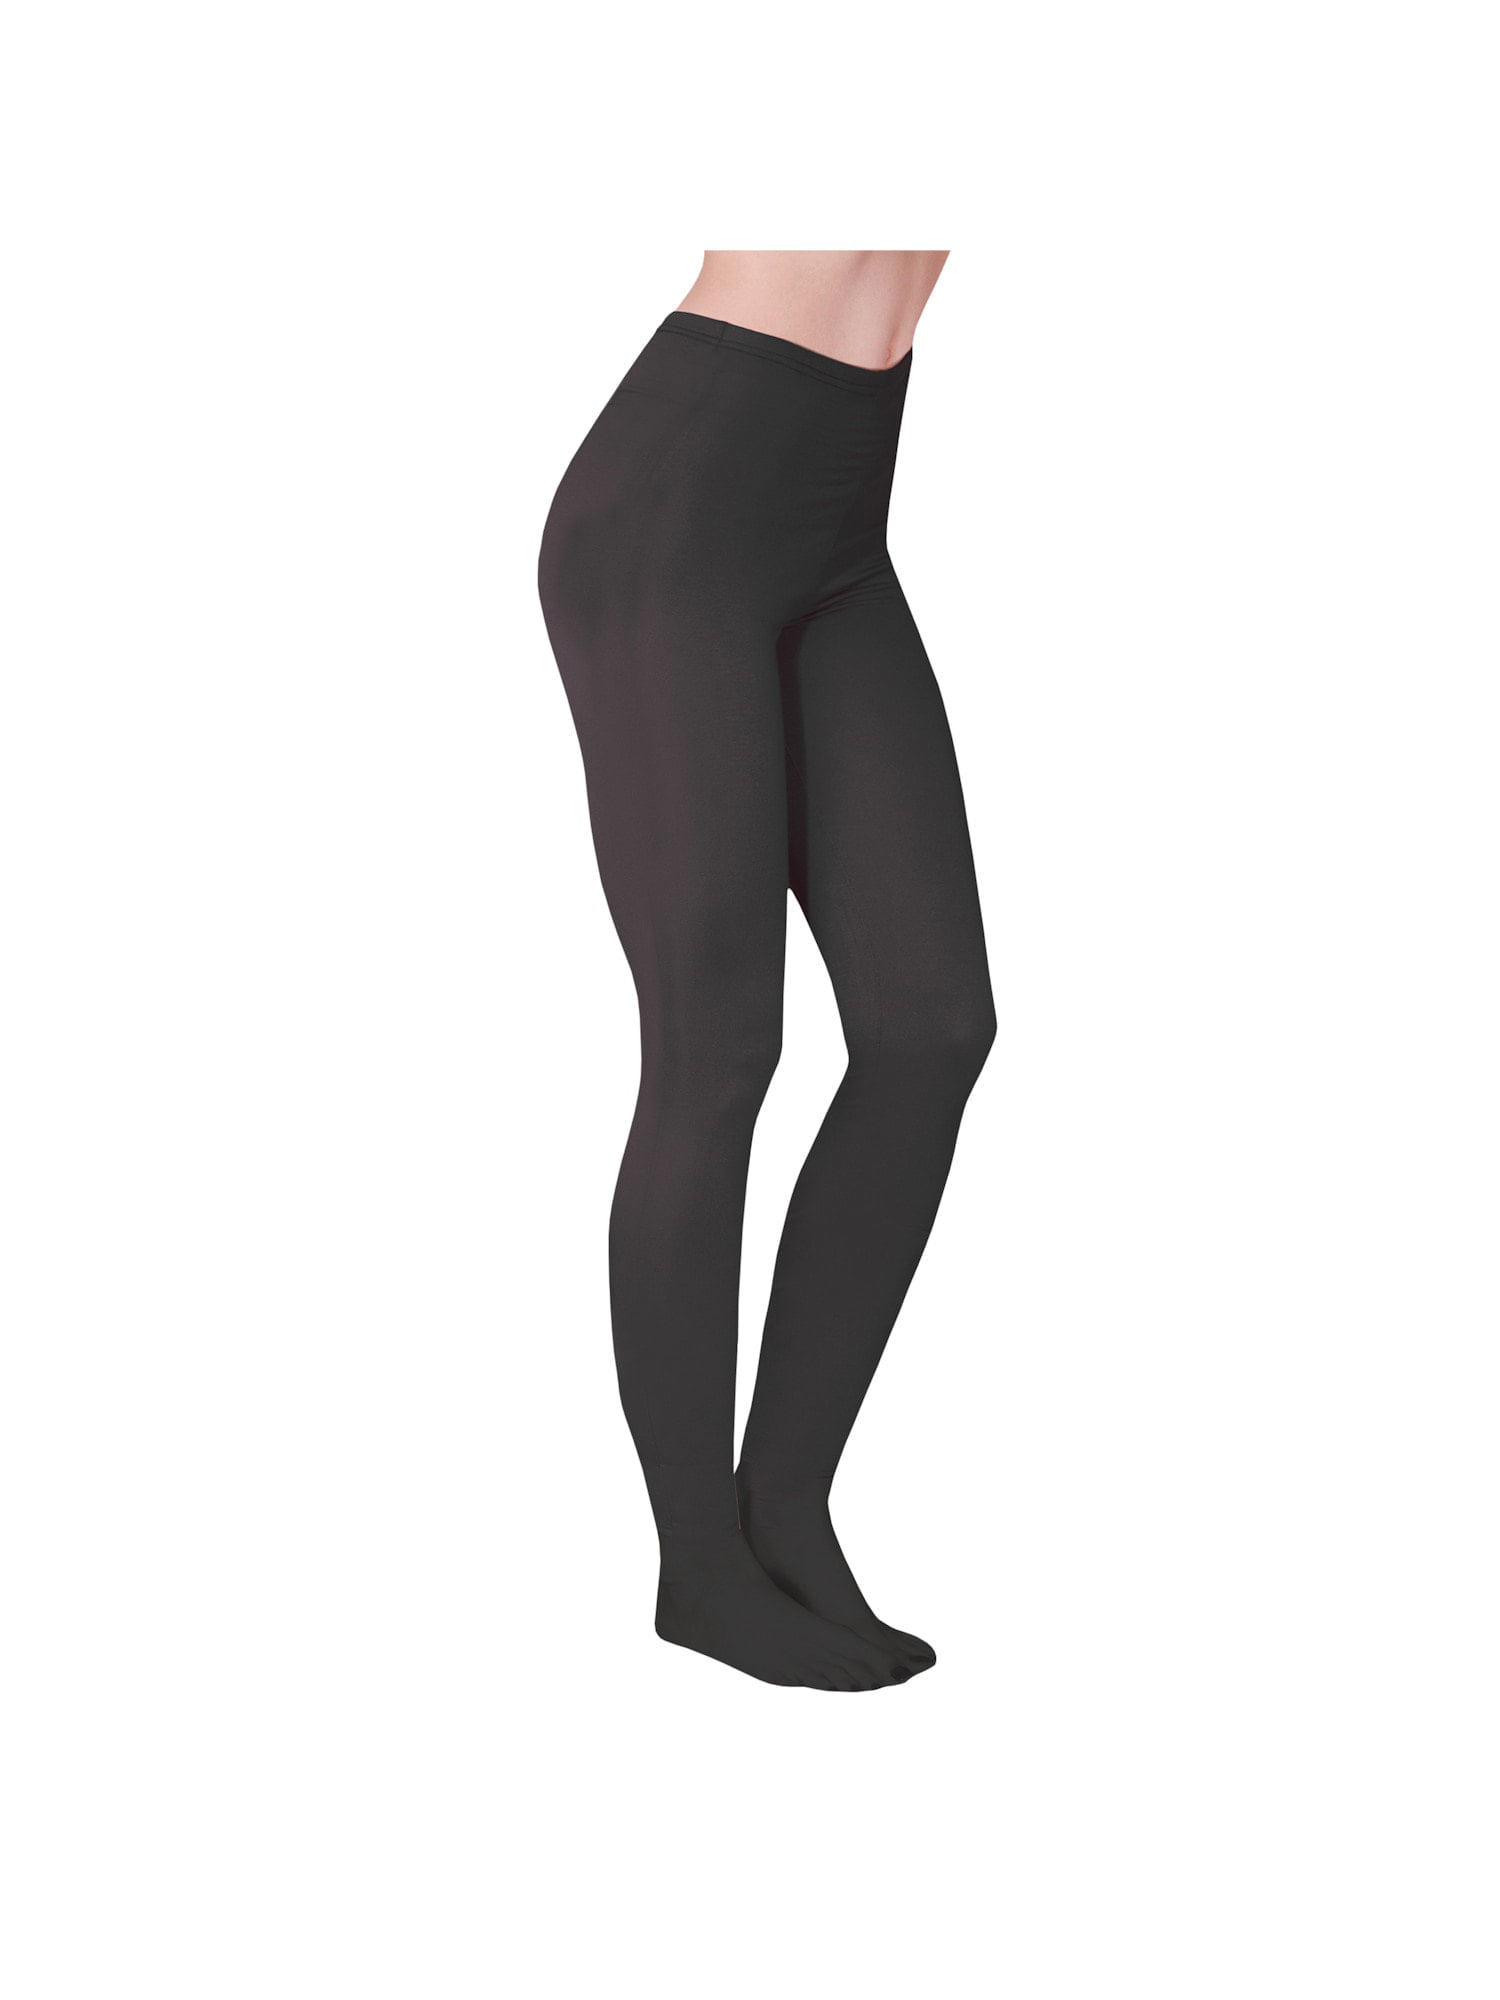 Mesnove 2019 Black Legs Fake Translucent Warm Fleece Pantyhose